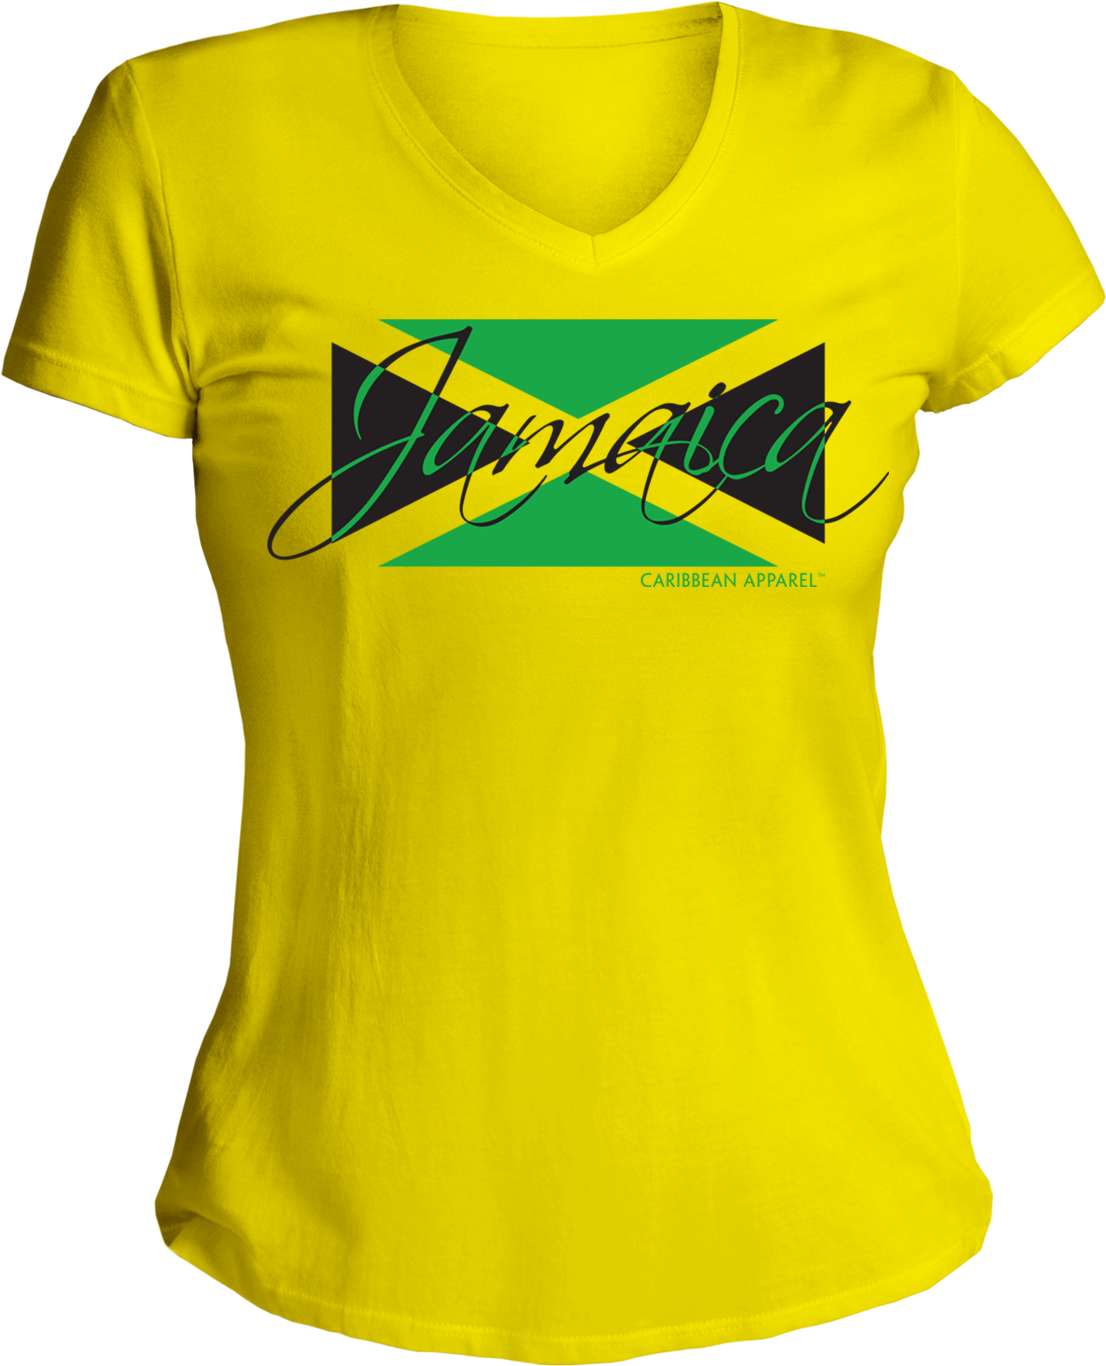 Jamaica Caribbean Apparel Yellow Tshirt PNG